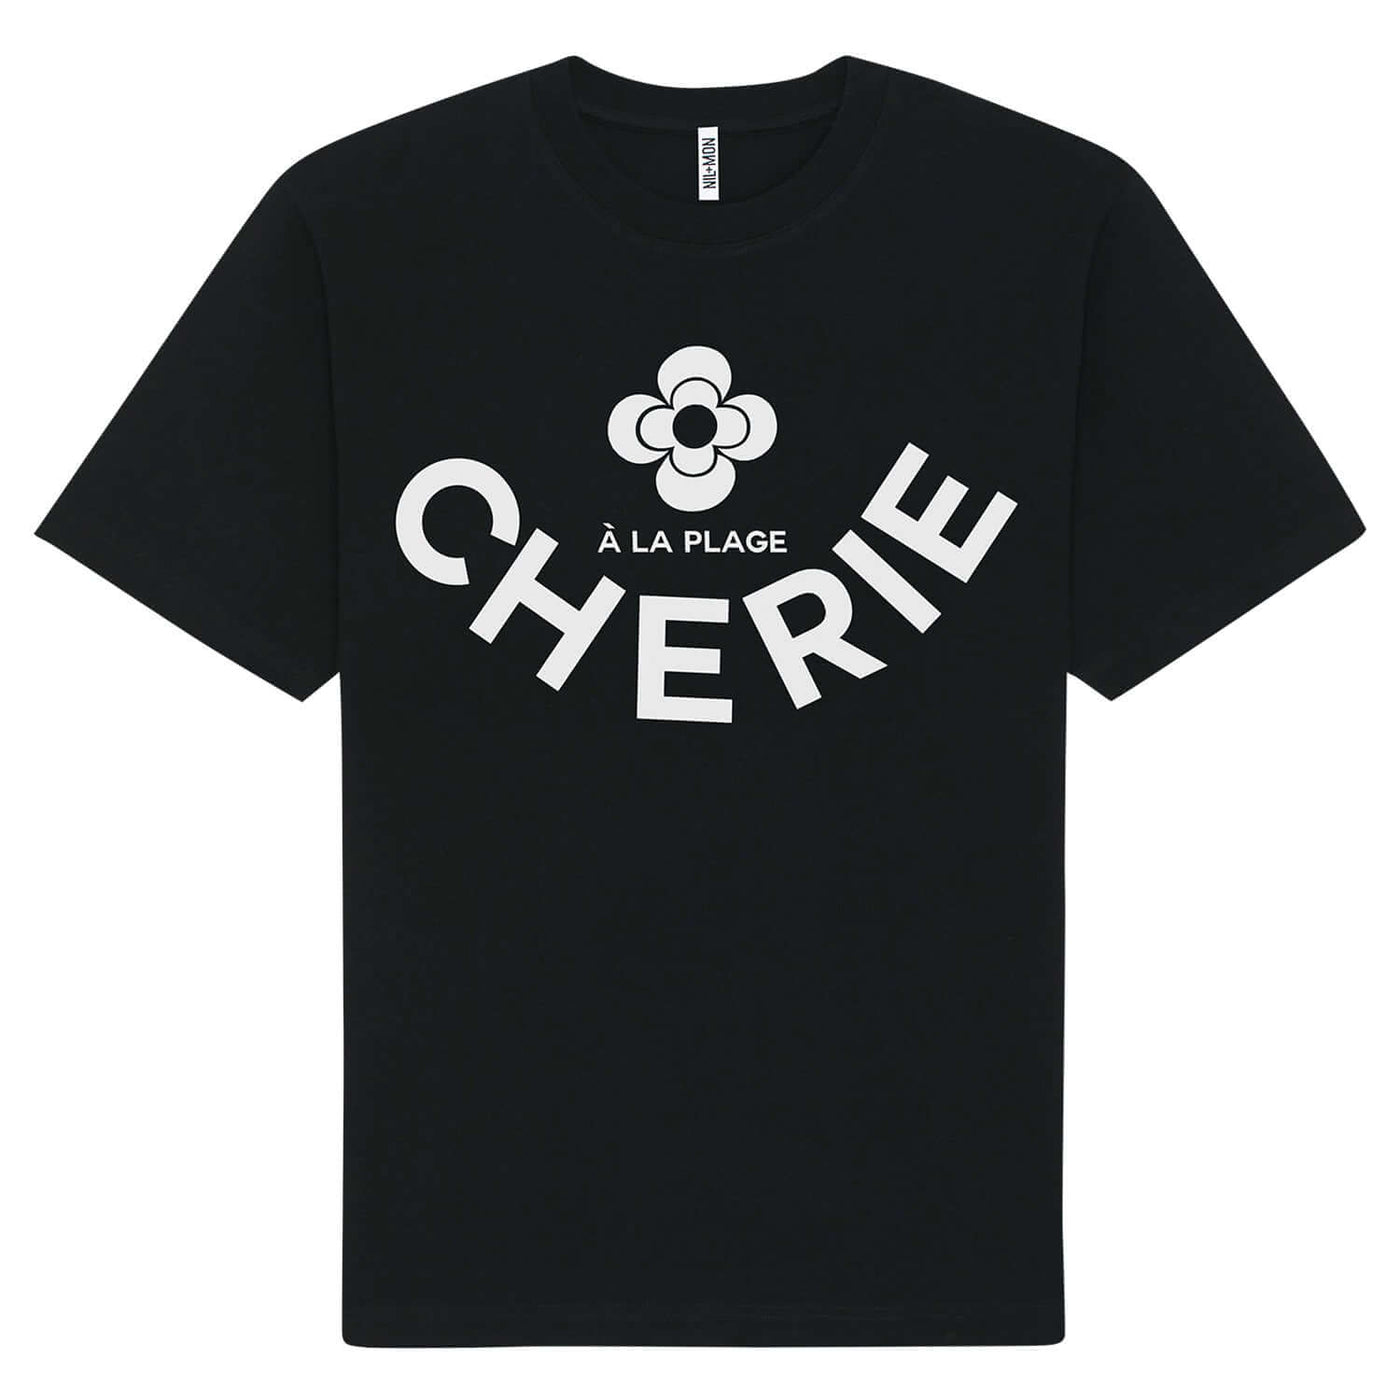 XXL Beach Shirt "Cherie" - black